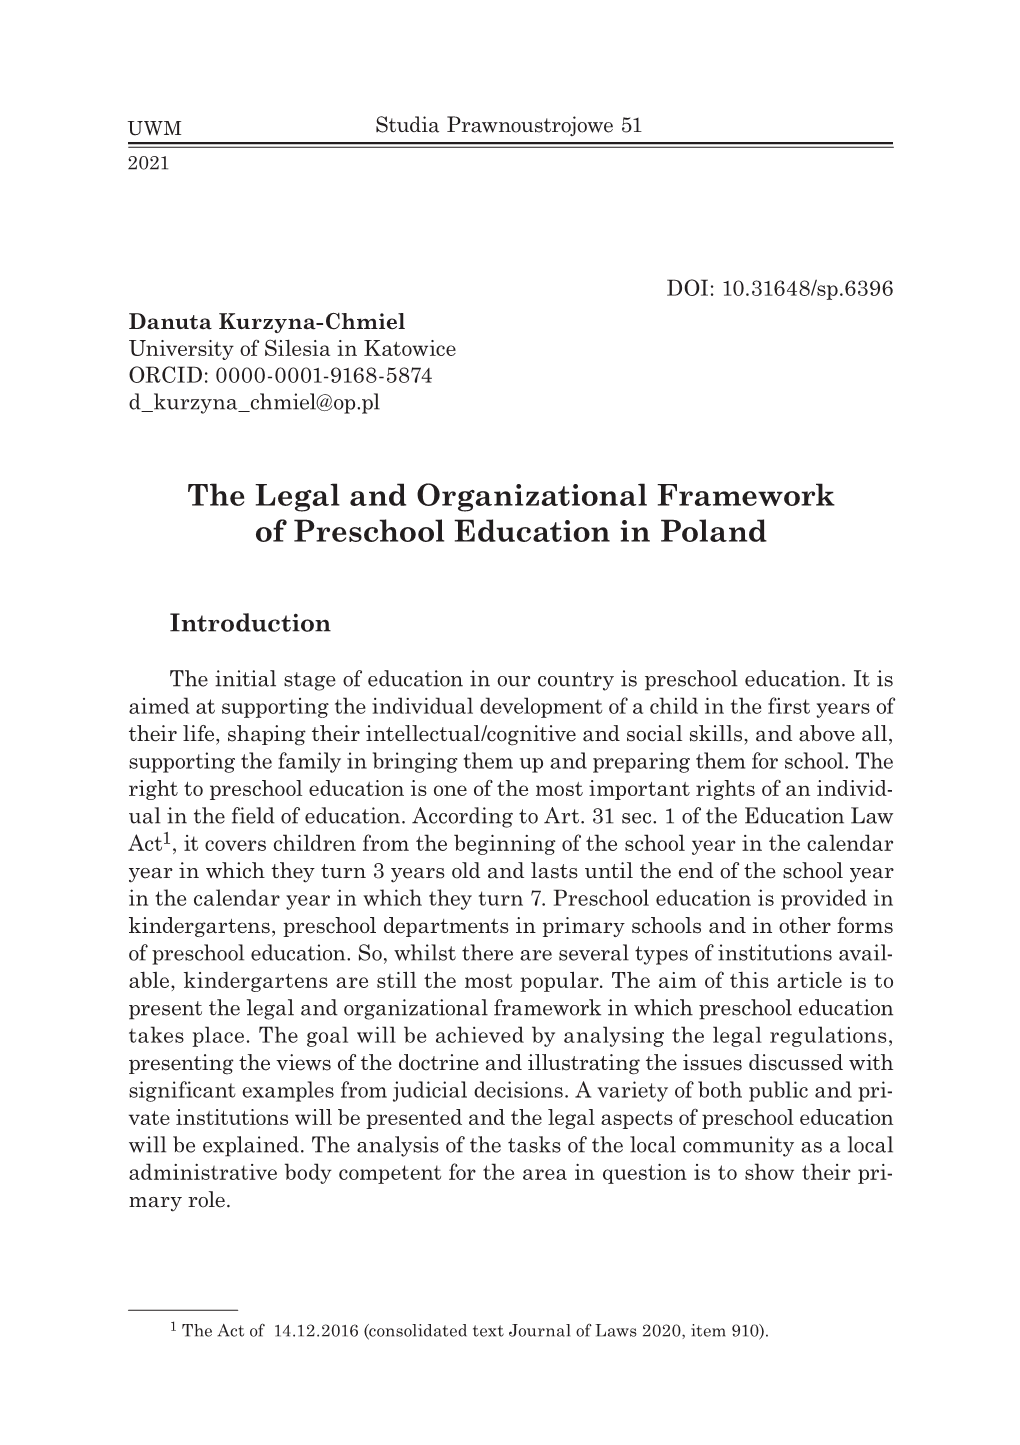 The Legal and Organizational Framework of Preschool Education in Poland